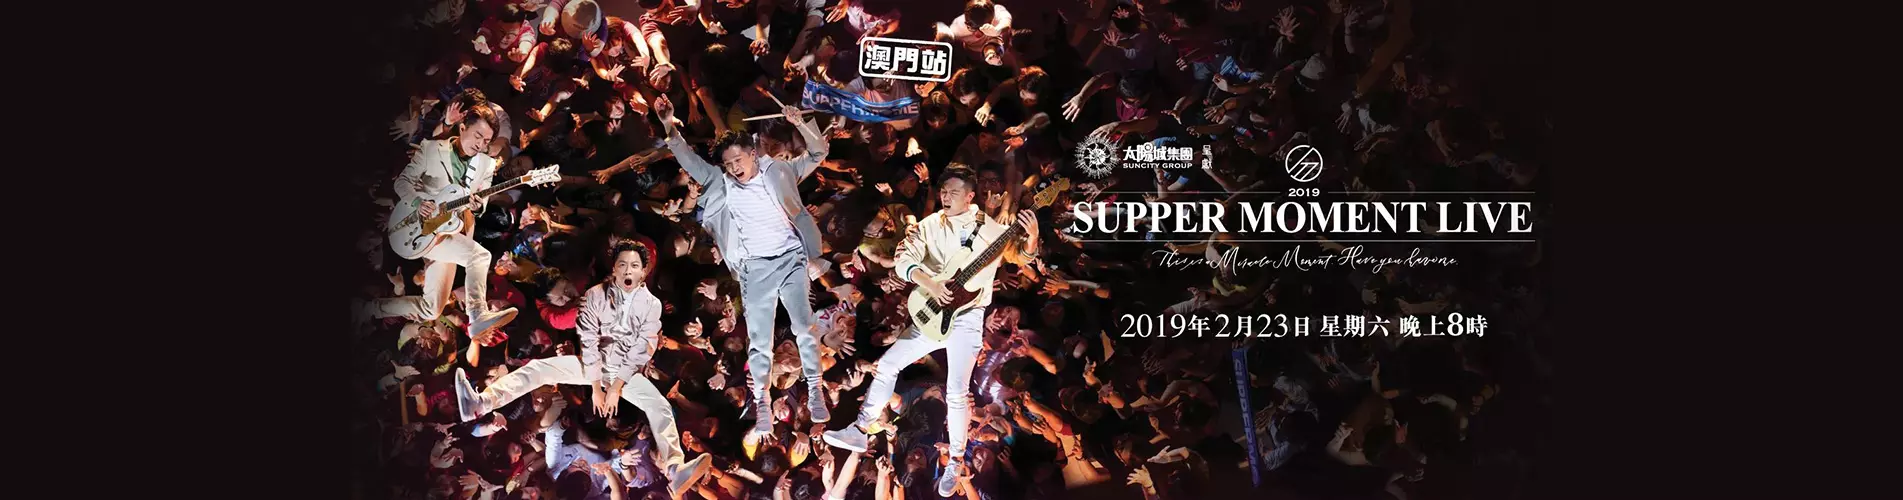 SUPPER MOMENT LIVE 2019 - 澳門站